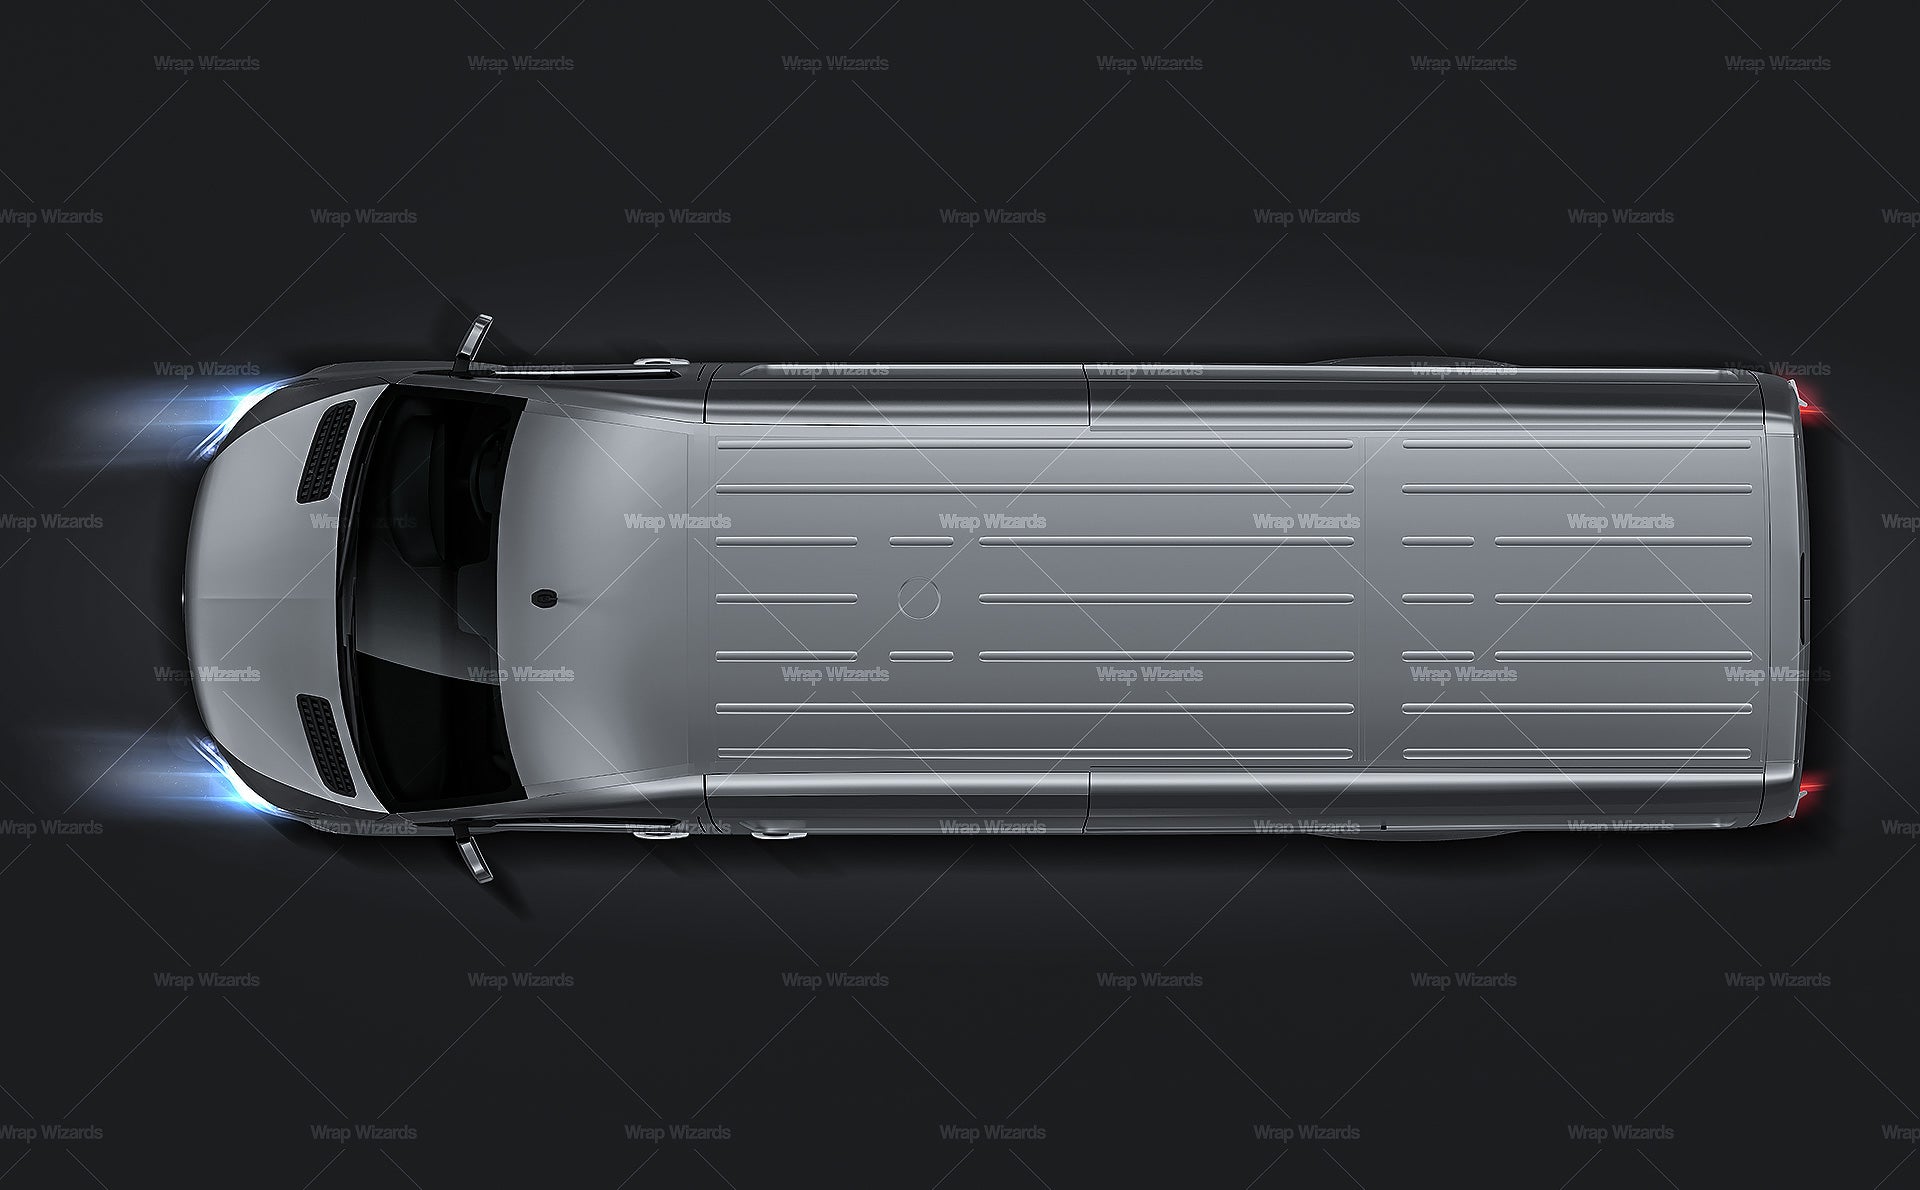 Mercedes Benz Sprinter L3H2 panel van 2020 satin matt finish - all sides Car Mockup Template.psd